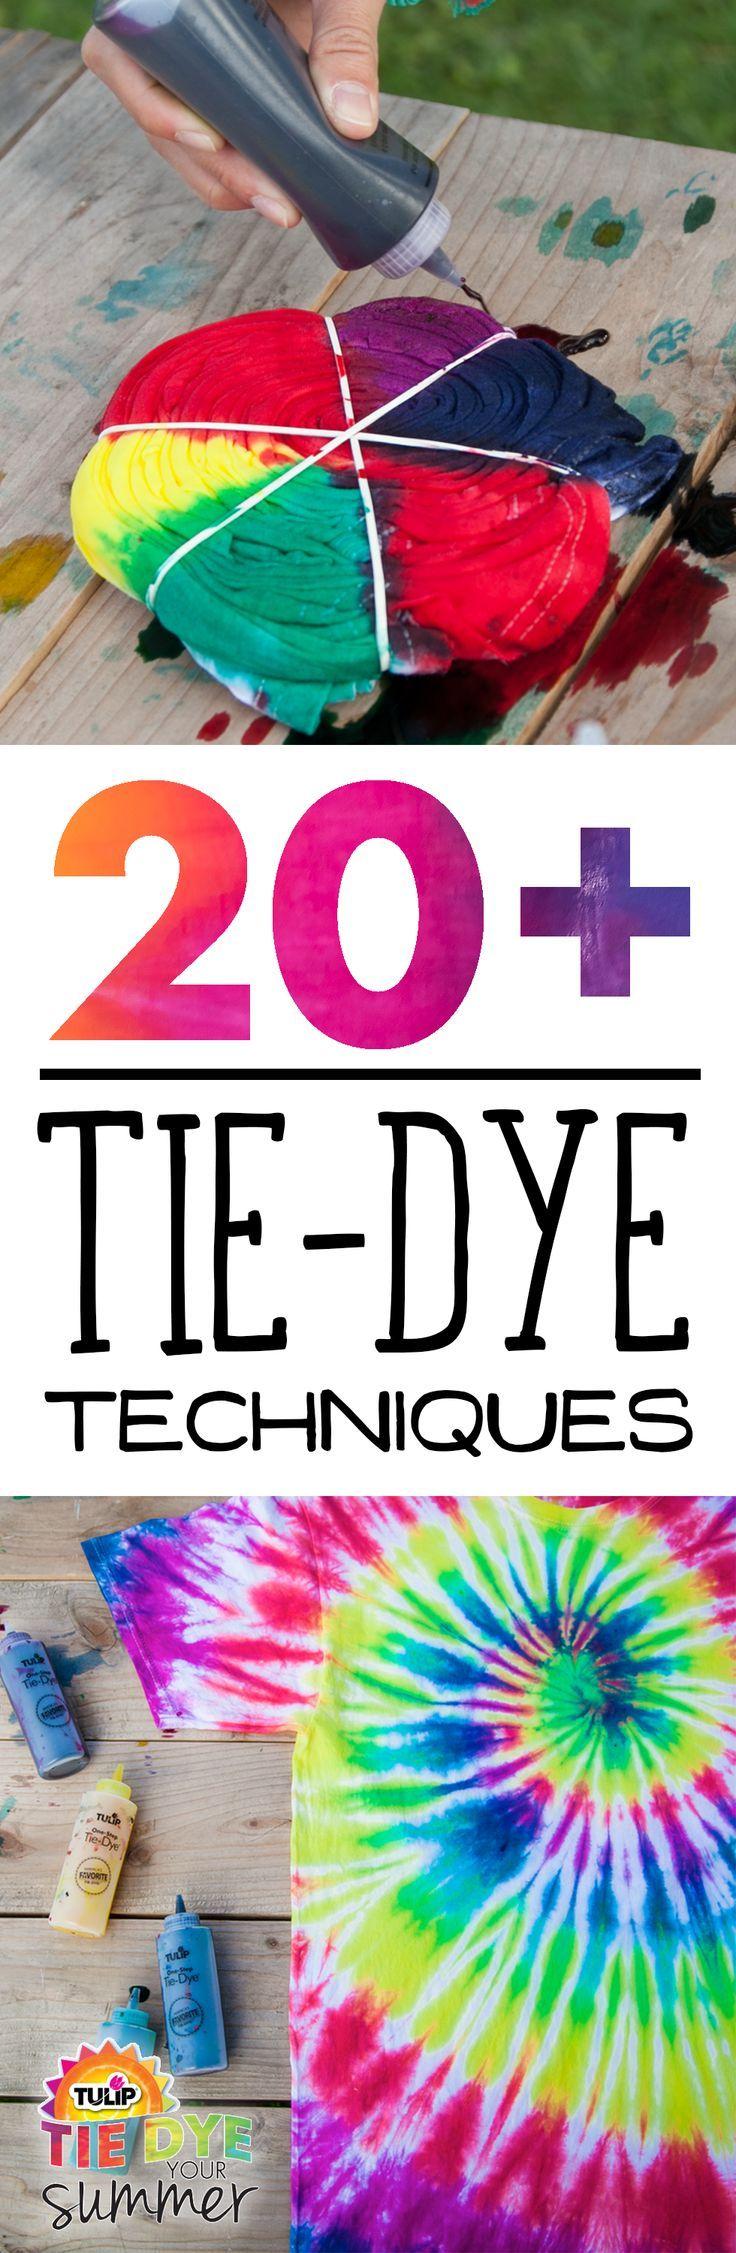 Wedding - Tie-Dye Techniques